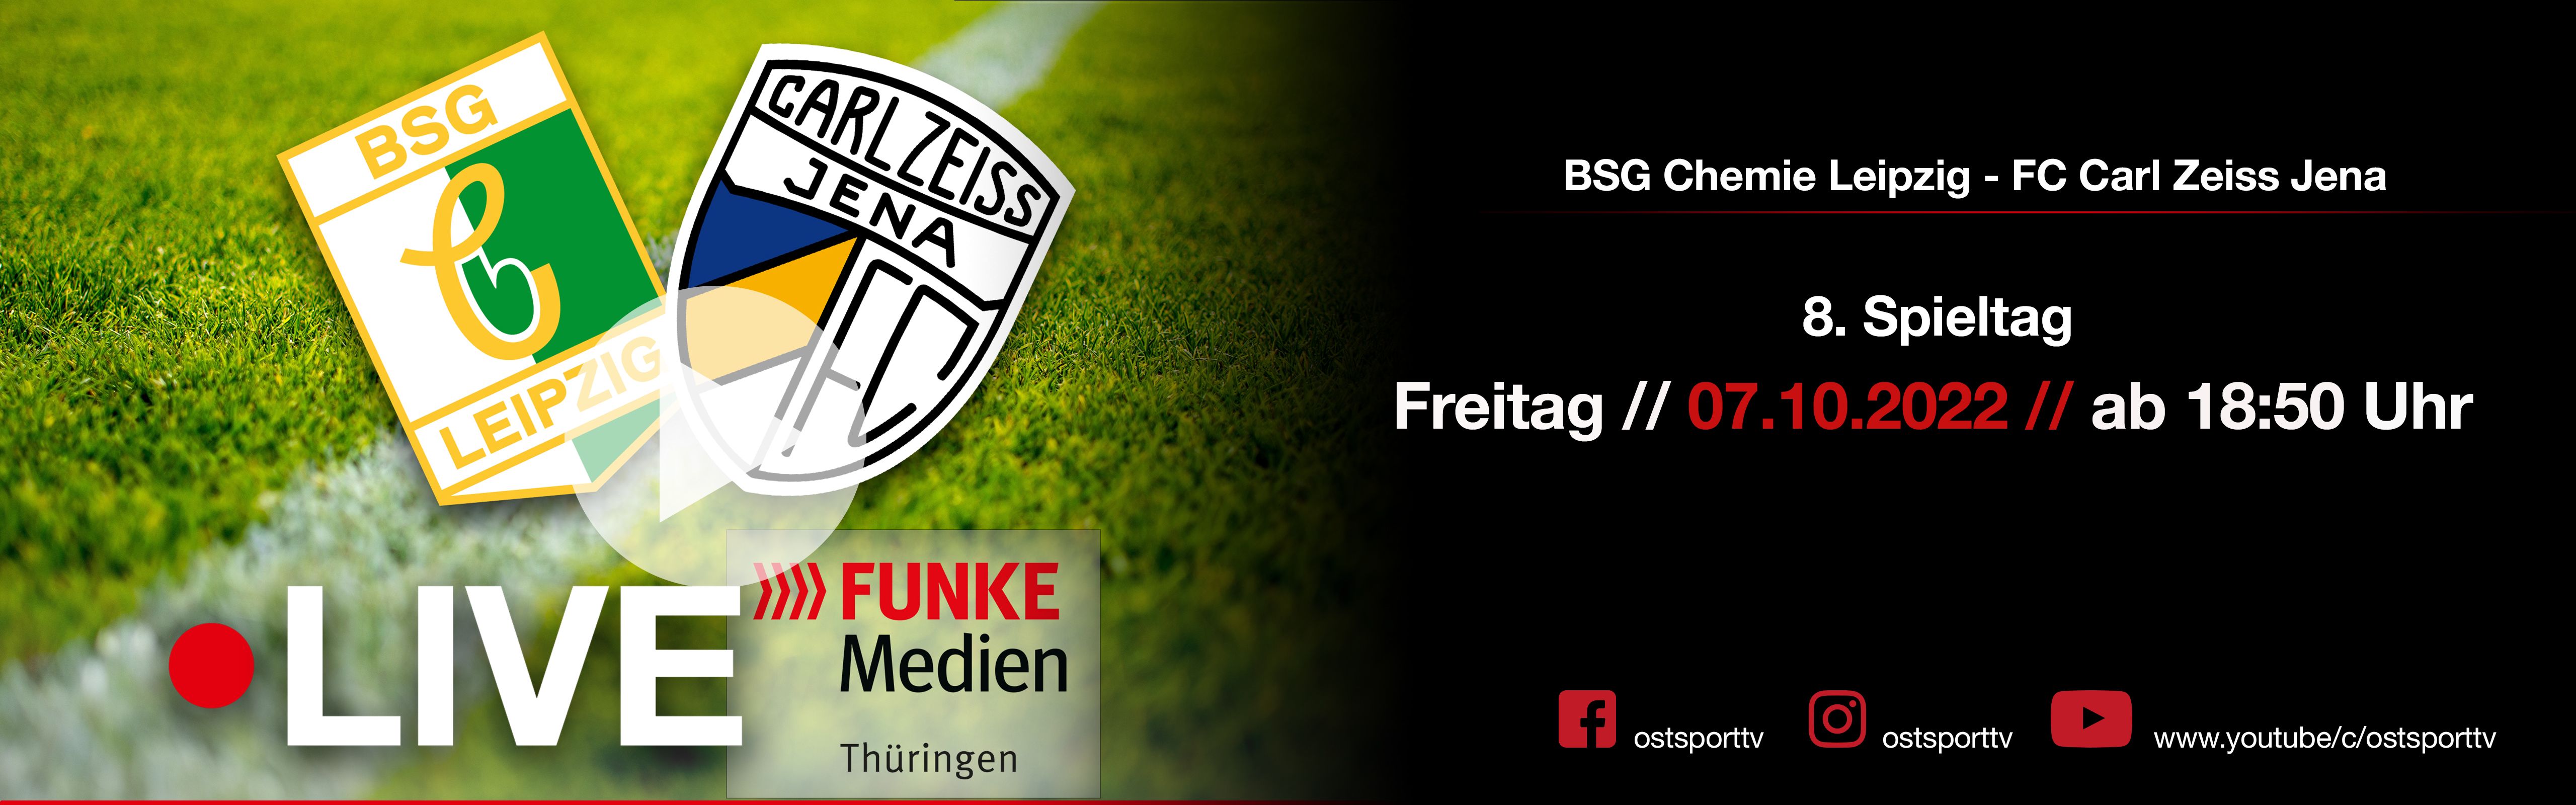 LIVE bei Funke Medien | BSG Chemie Leipzig - FC Carl Zeiss Jena | 8. Spieltag (Regionalliga Nordost)